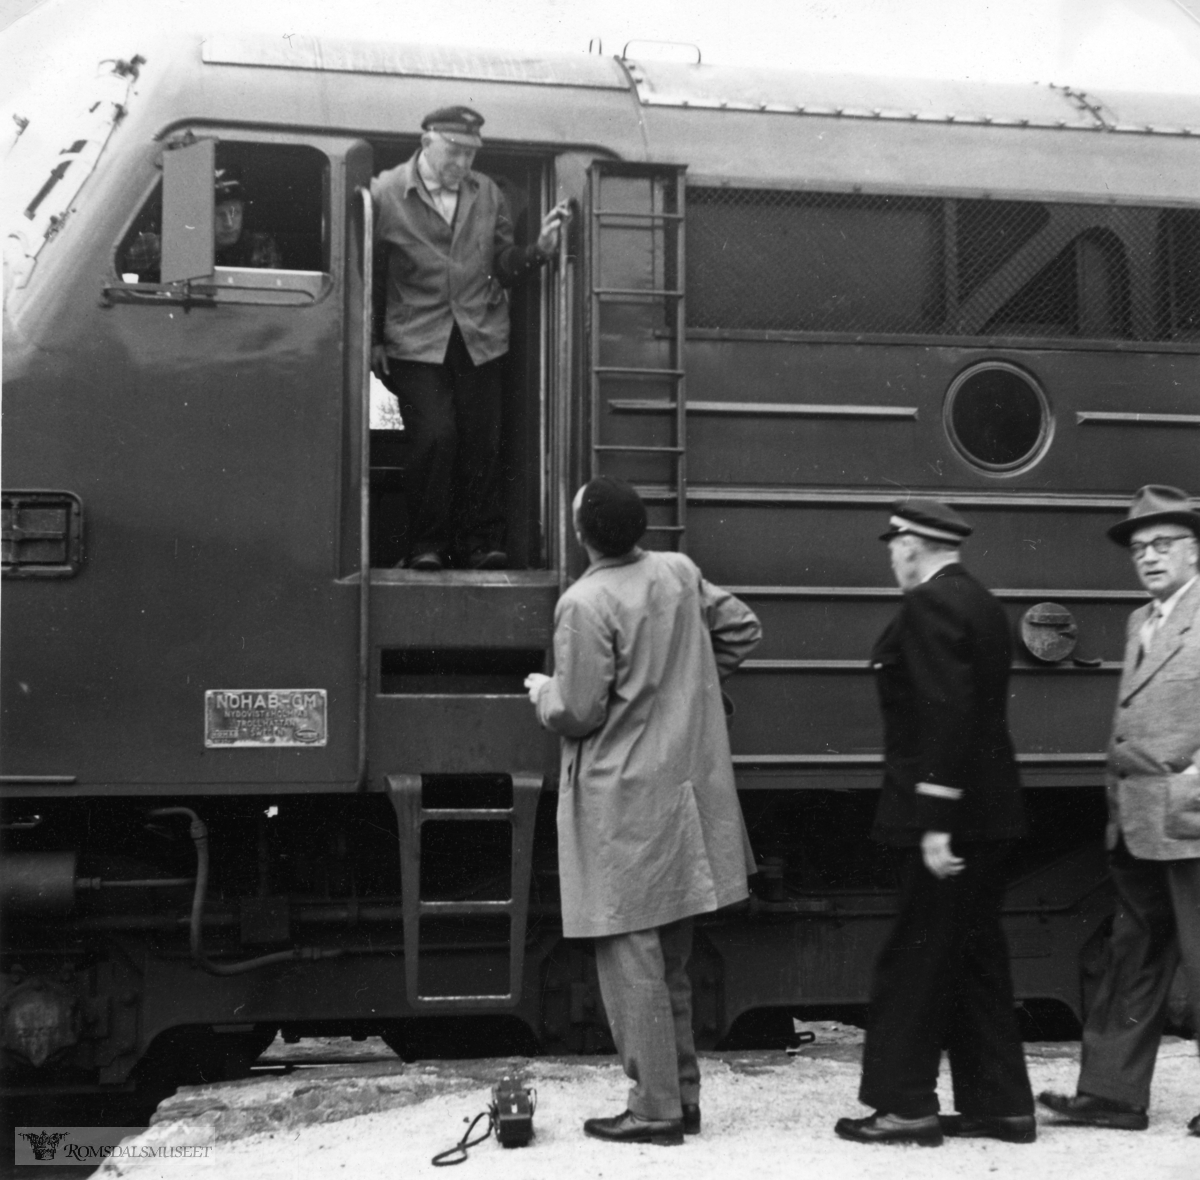 Nattoget Oslo-Åndalsnes morgenen 1.juni.1958, det første på Raumabanen med diesel-lokomotiv (3.605)...Lokomotivet var grønt.